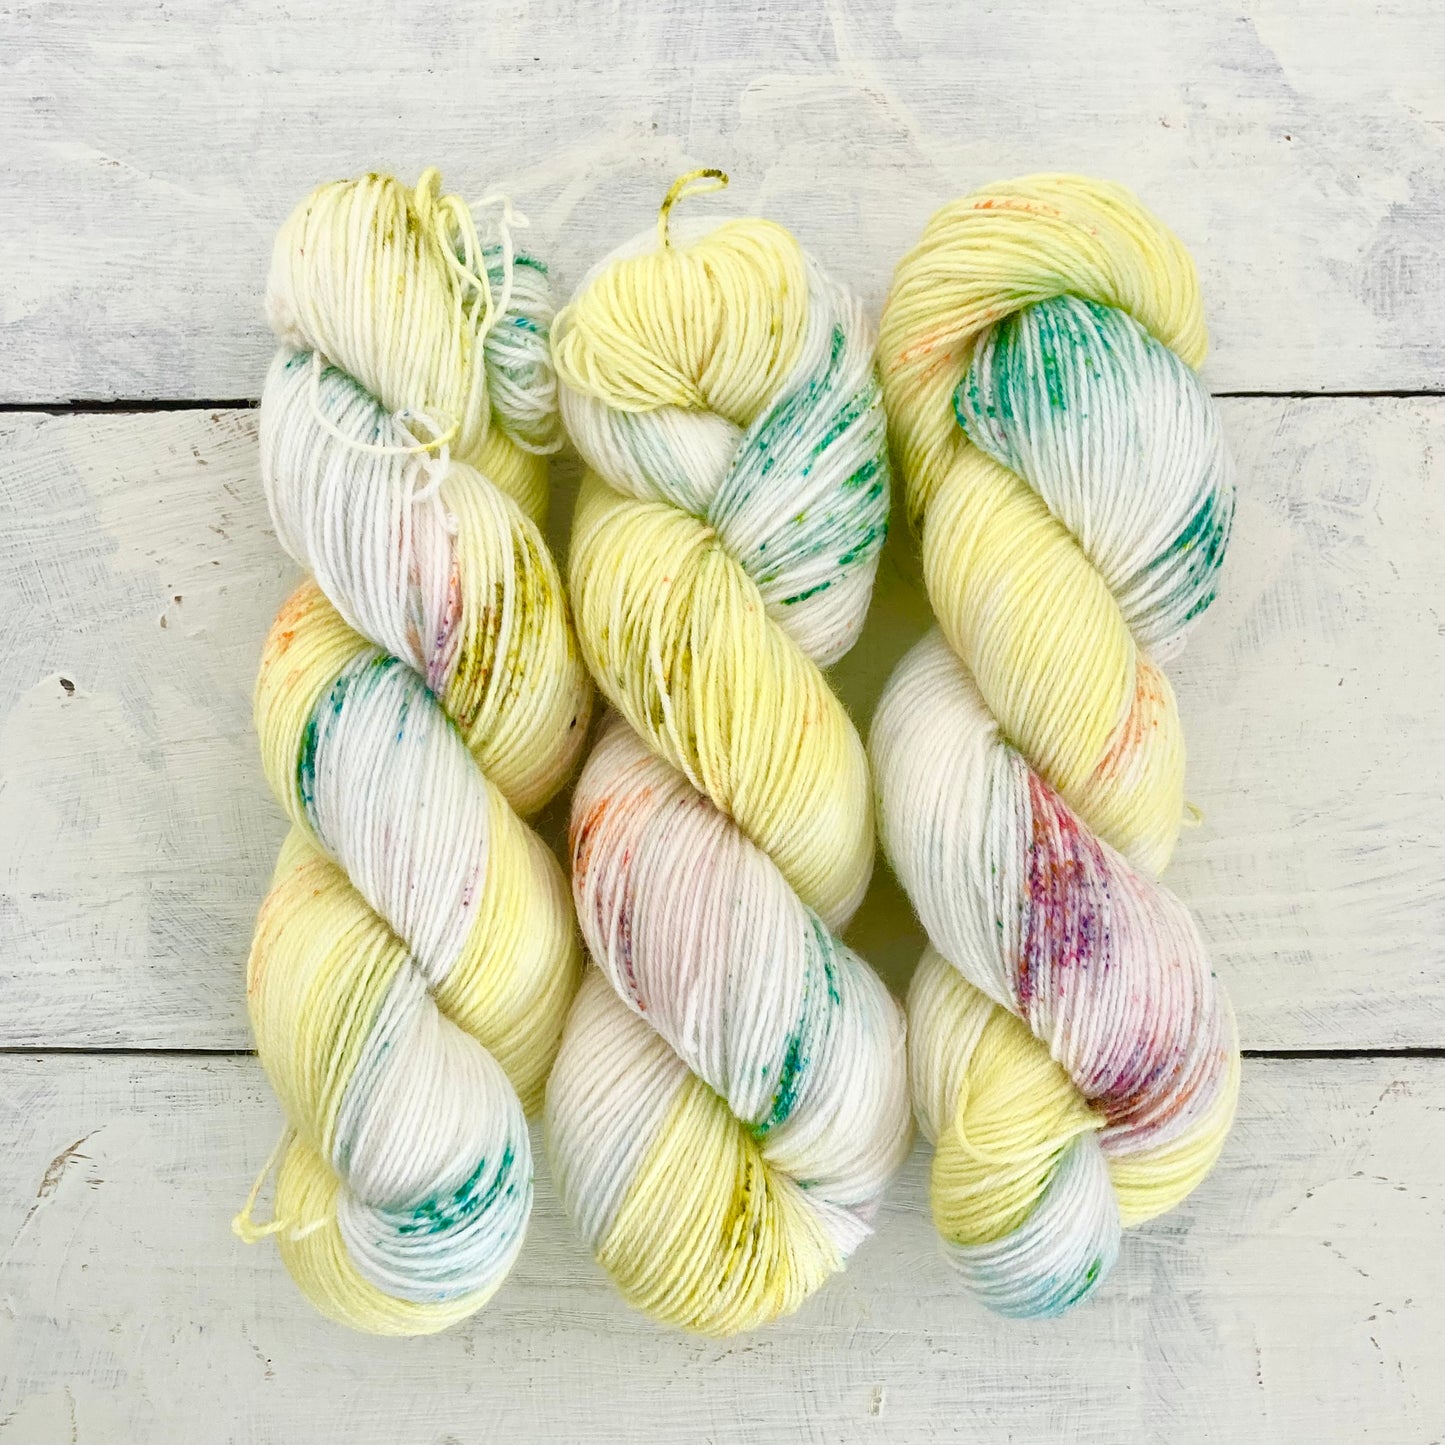 Hand-dyed yarn No.46 sock yarn "Variations in G"